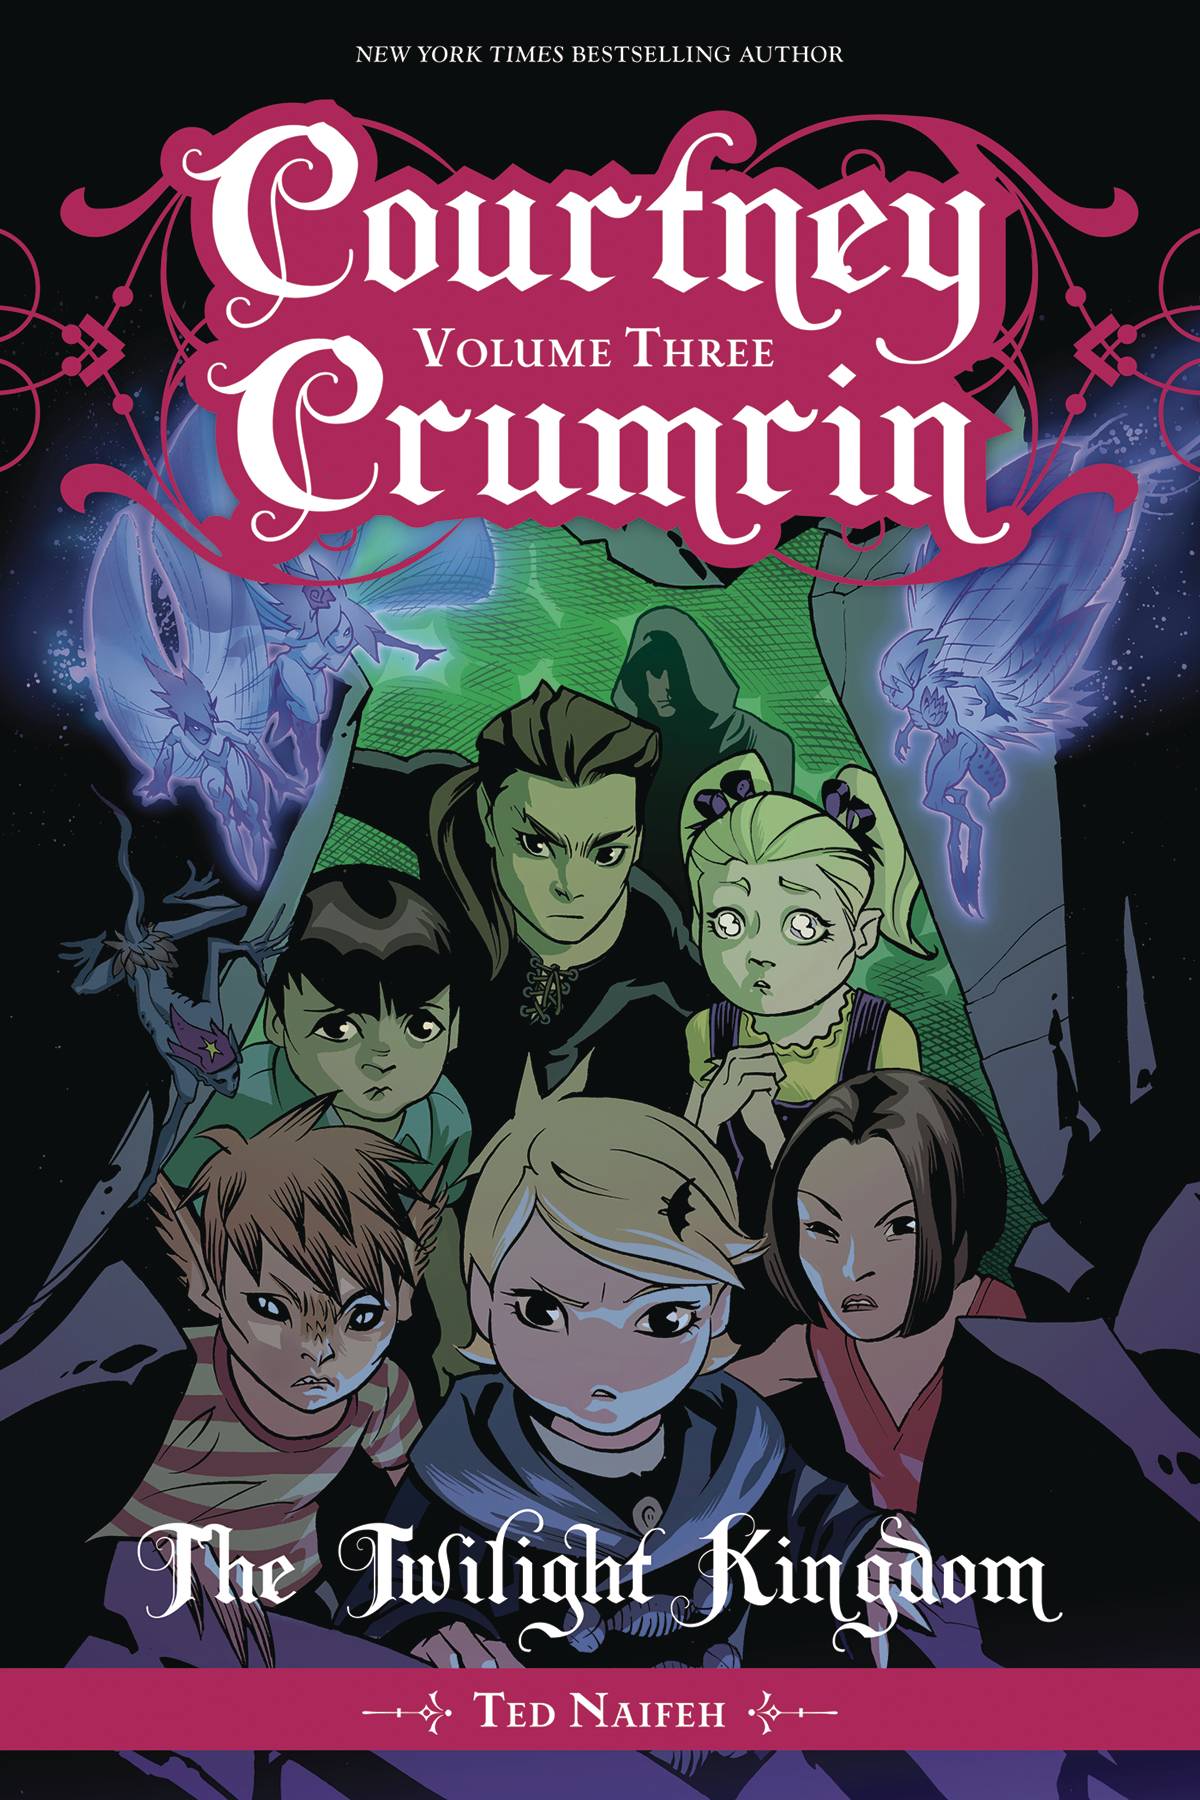 Courtney Crumrin Graphic Novel Volume 3 Twilight Kingdom